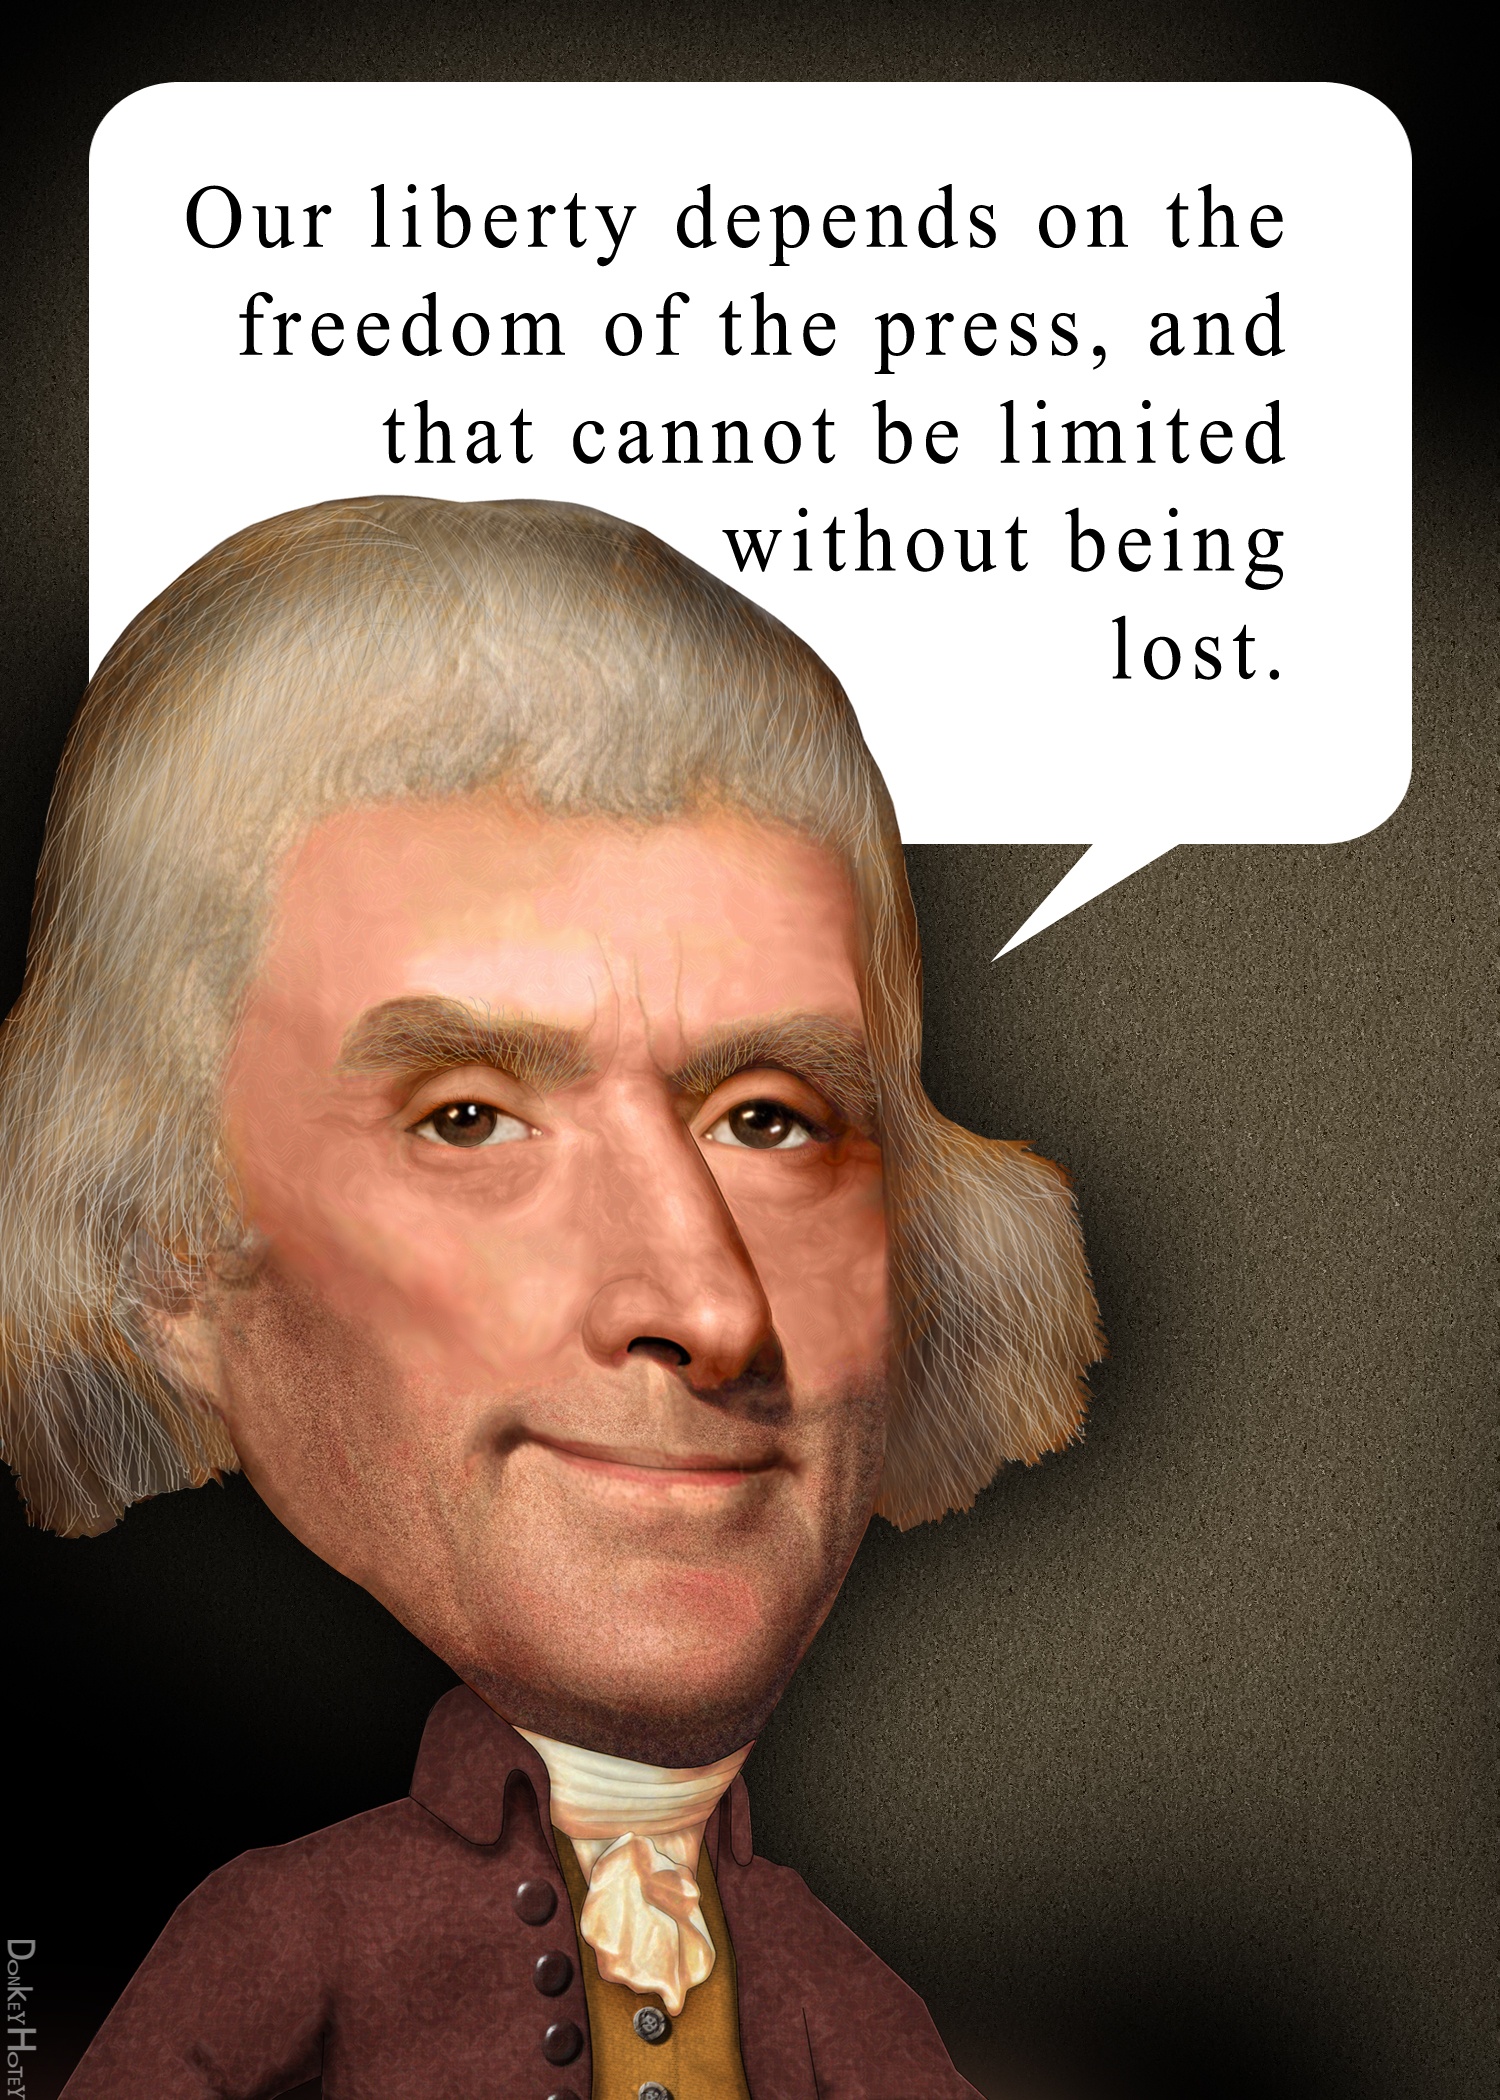 Jefferson Quotes Freedom Of Speech. QuotesGram